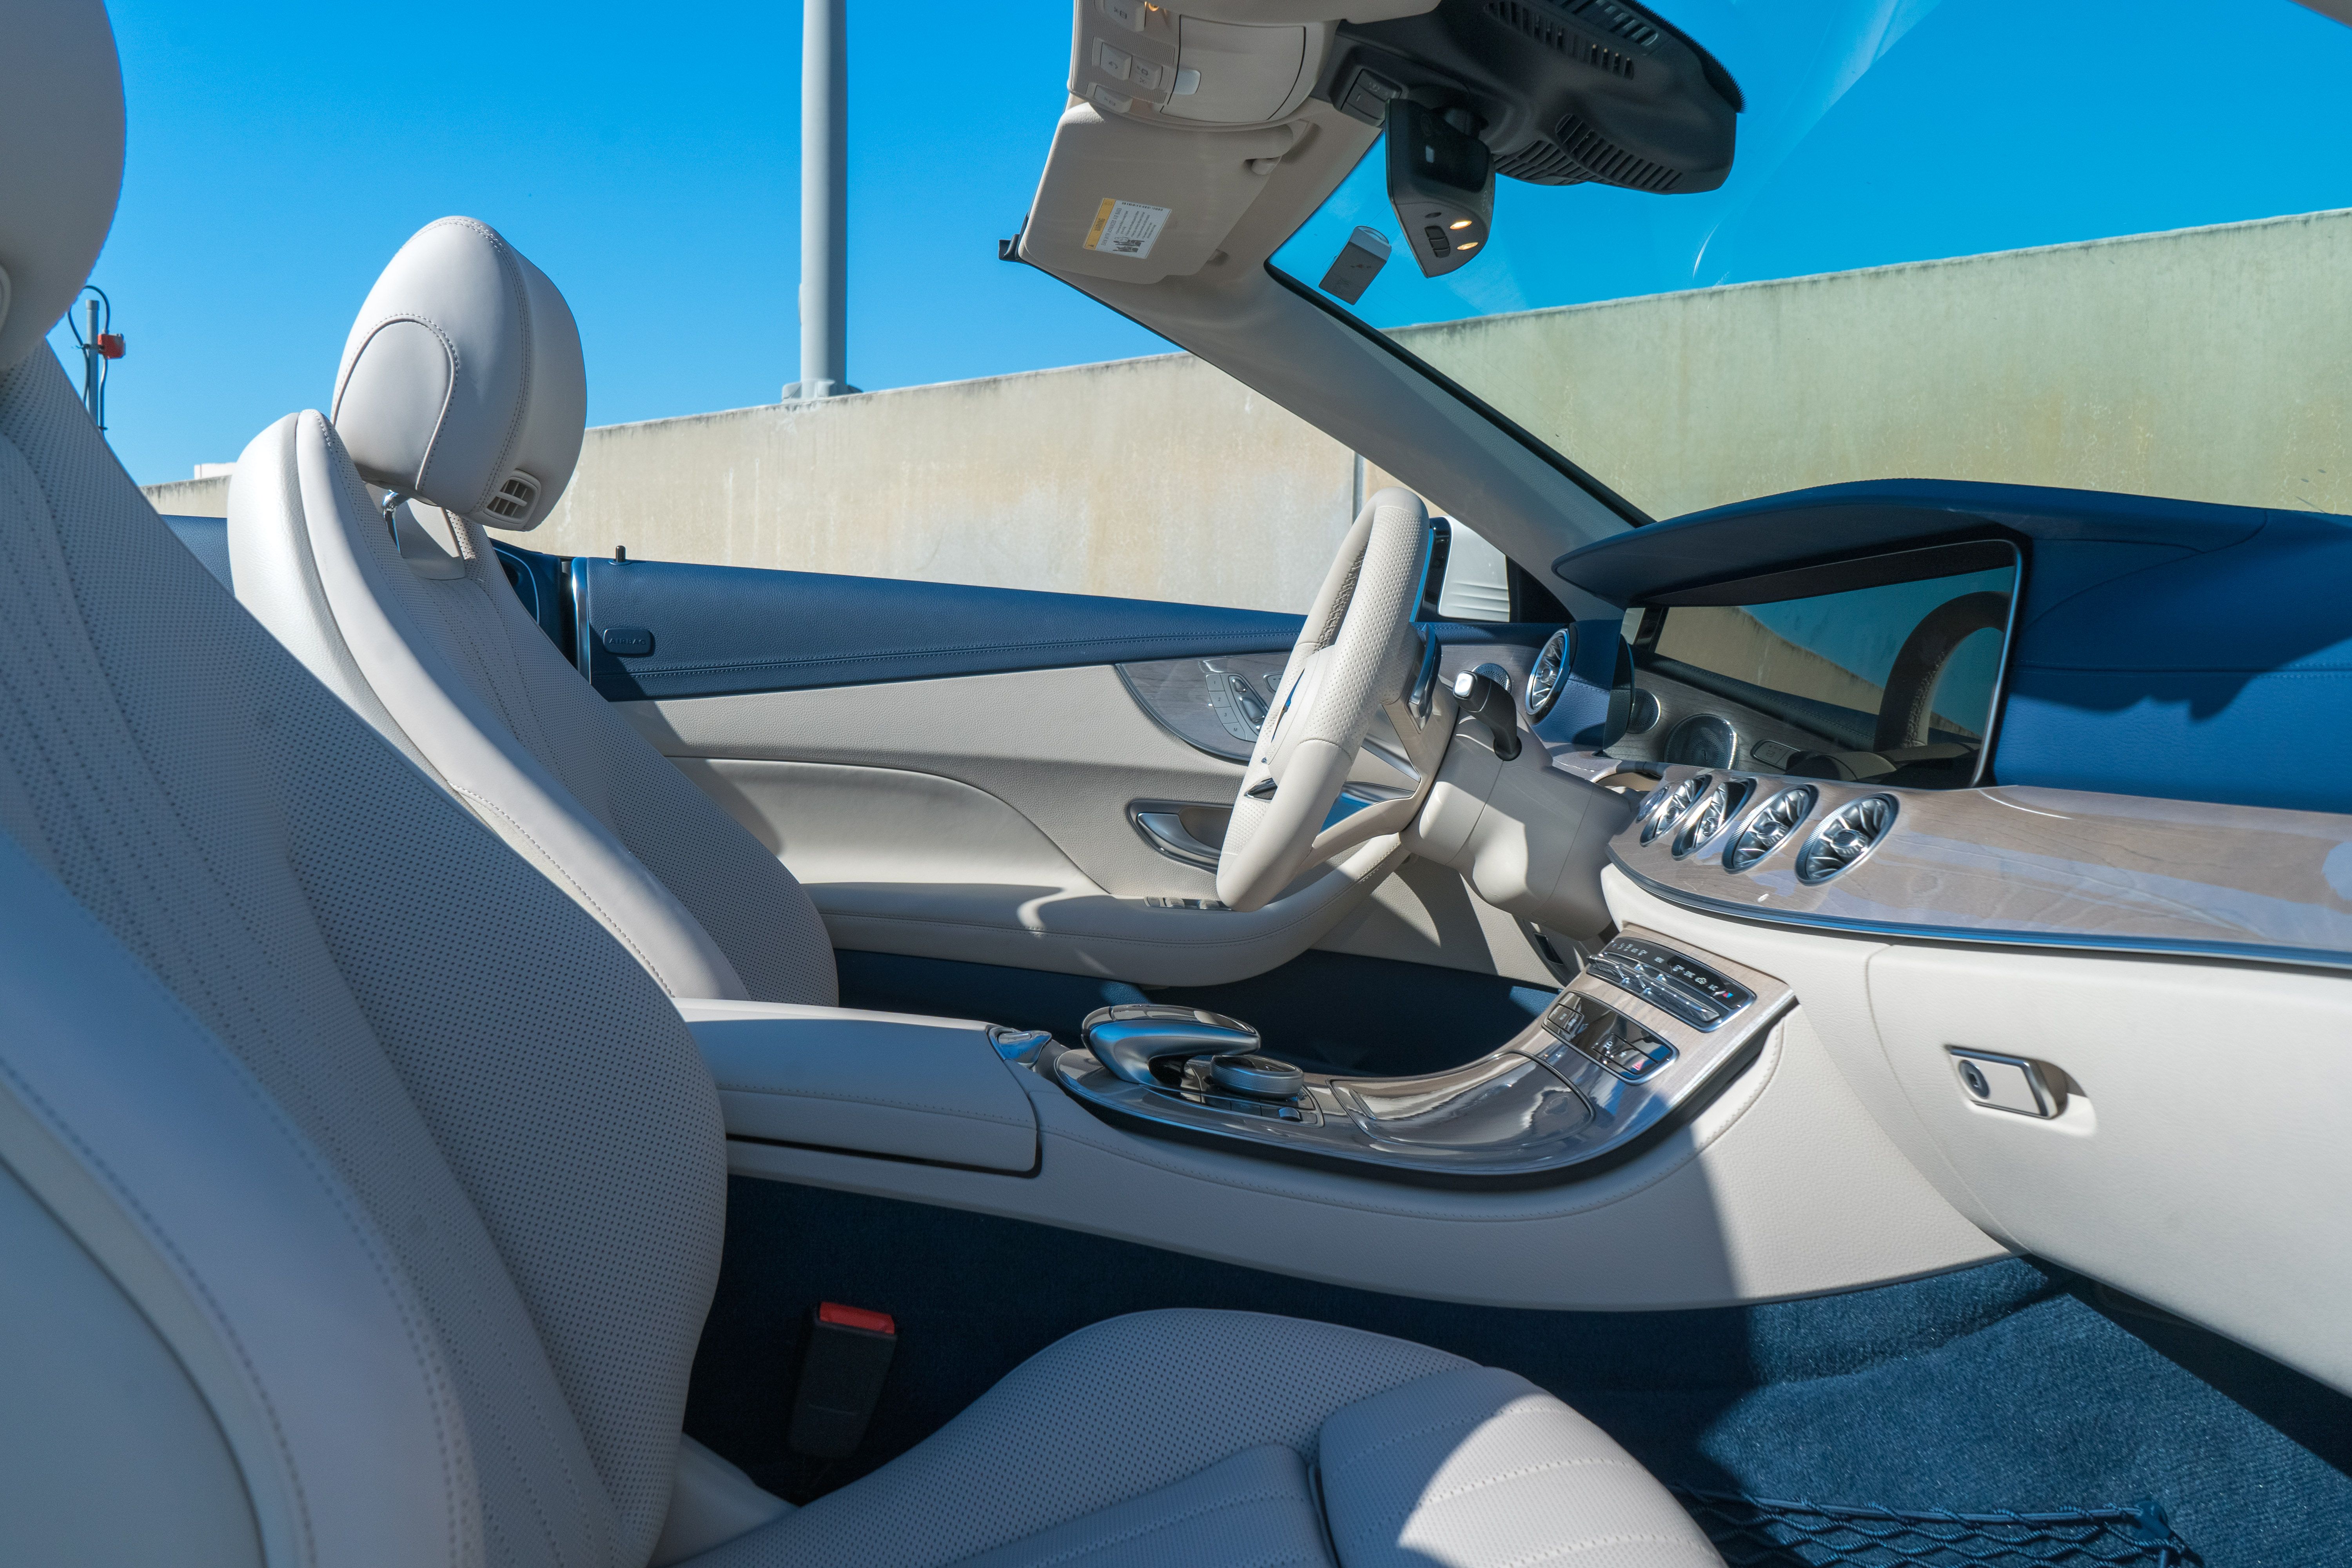 2020 Mercedes E450 Cabriolet - Driven